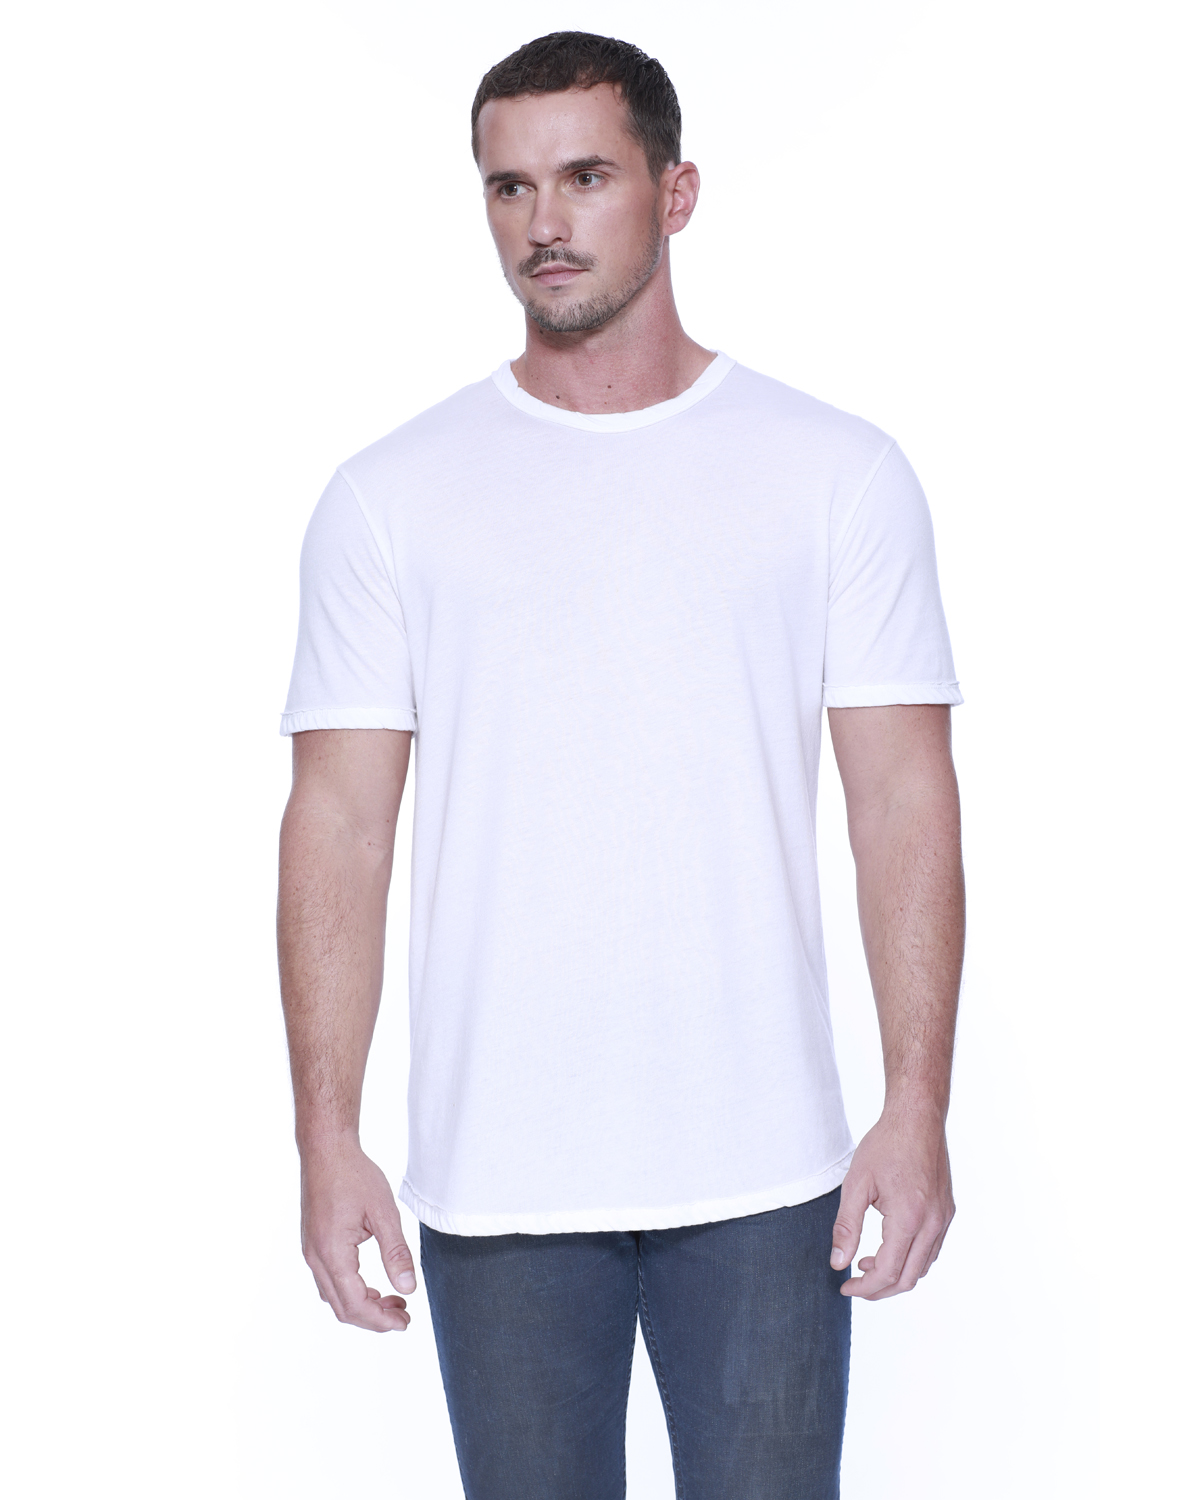 StarTee ST2820, Men's Cotton/Modal Twisted T-Shirt